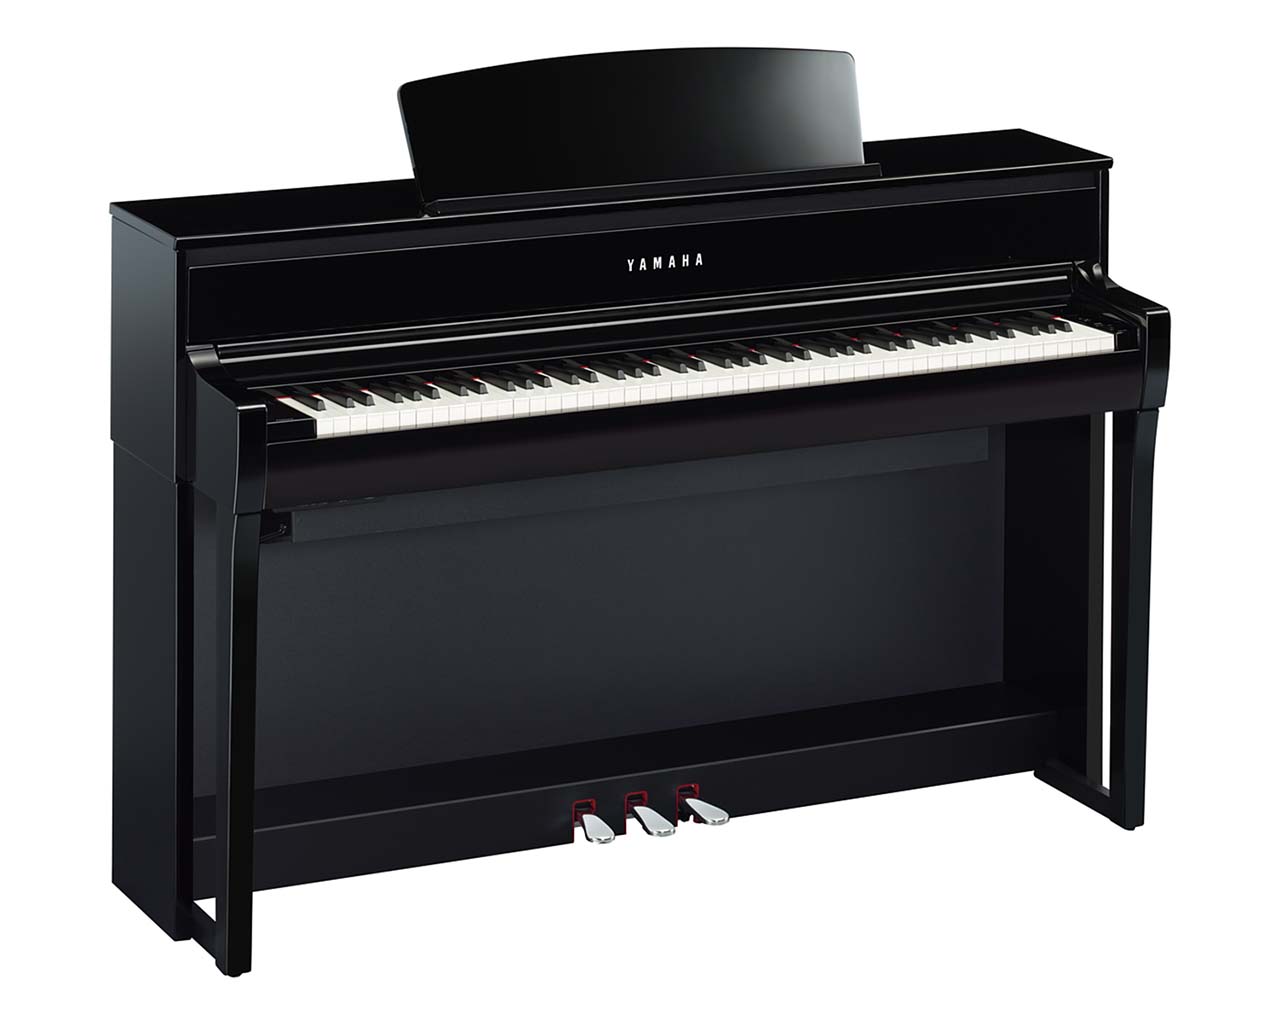 Yamaha-Clavinova-CLP-775-PE-Digitalpiano-schwarz-poliert-Pianohaus-Filipski